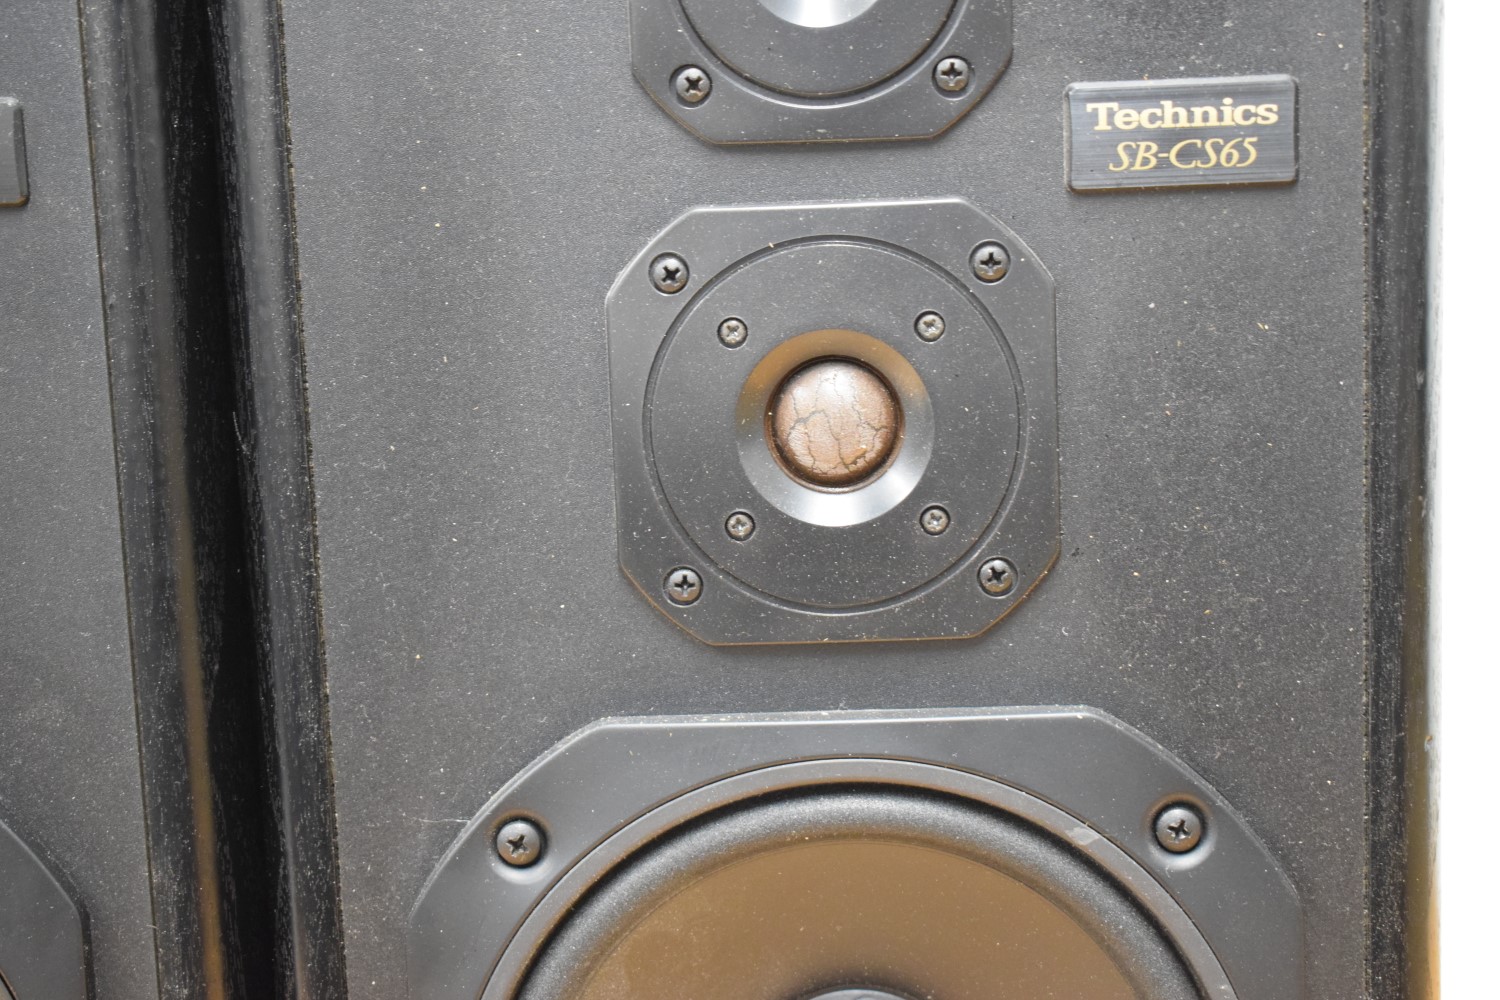 Technics SB-CS65 Speakerset